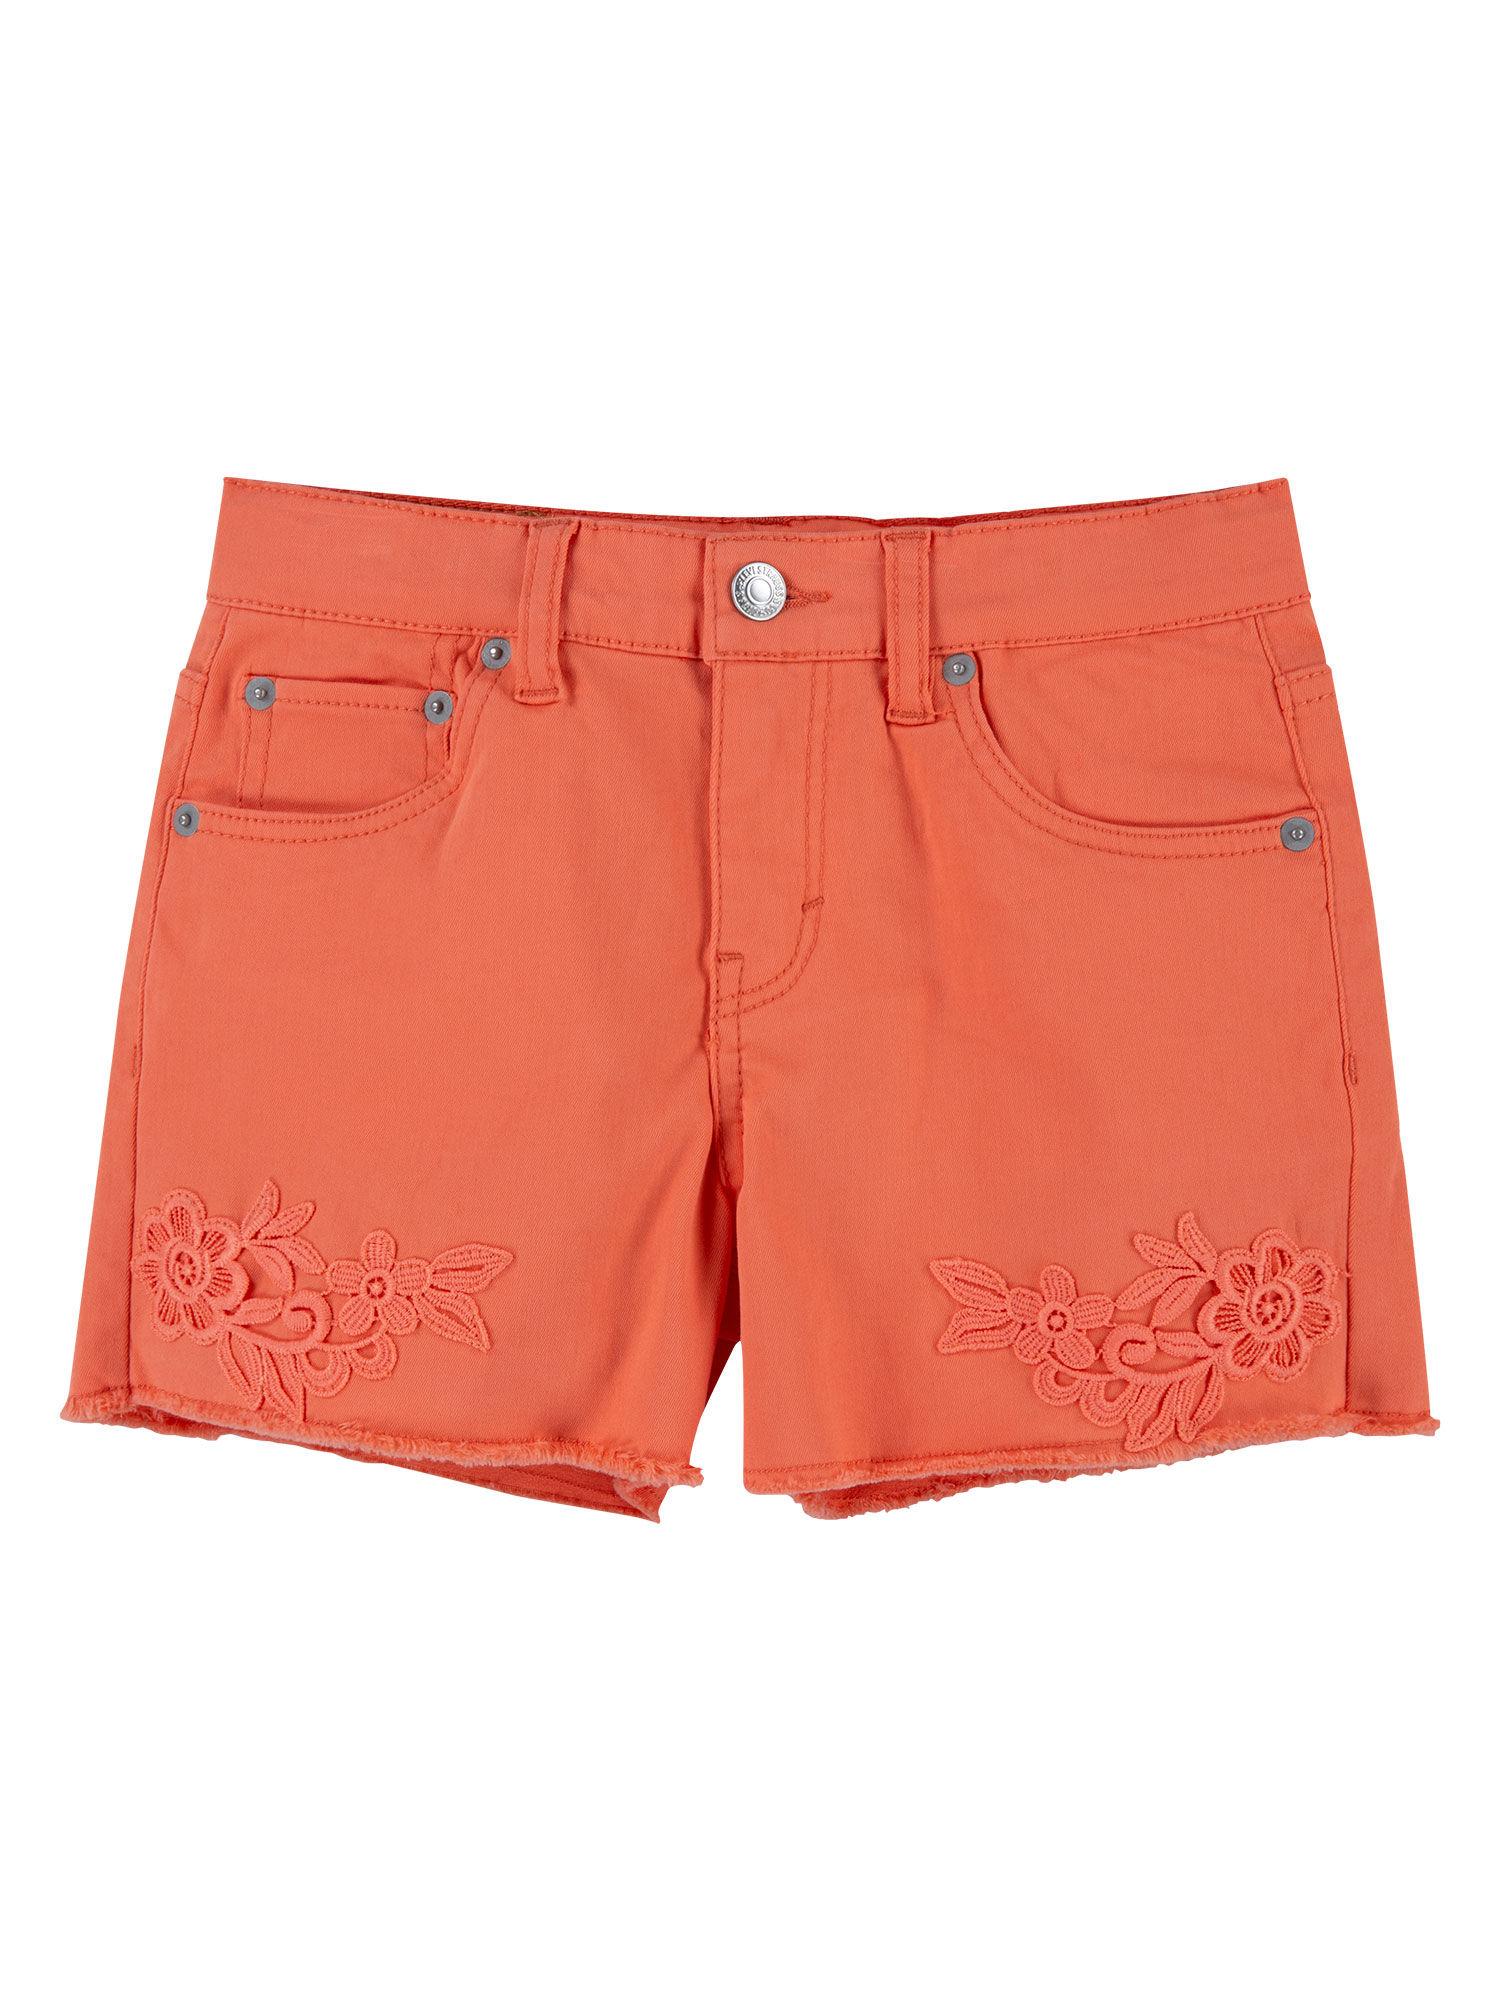 girls-orange-embroidered-shorts